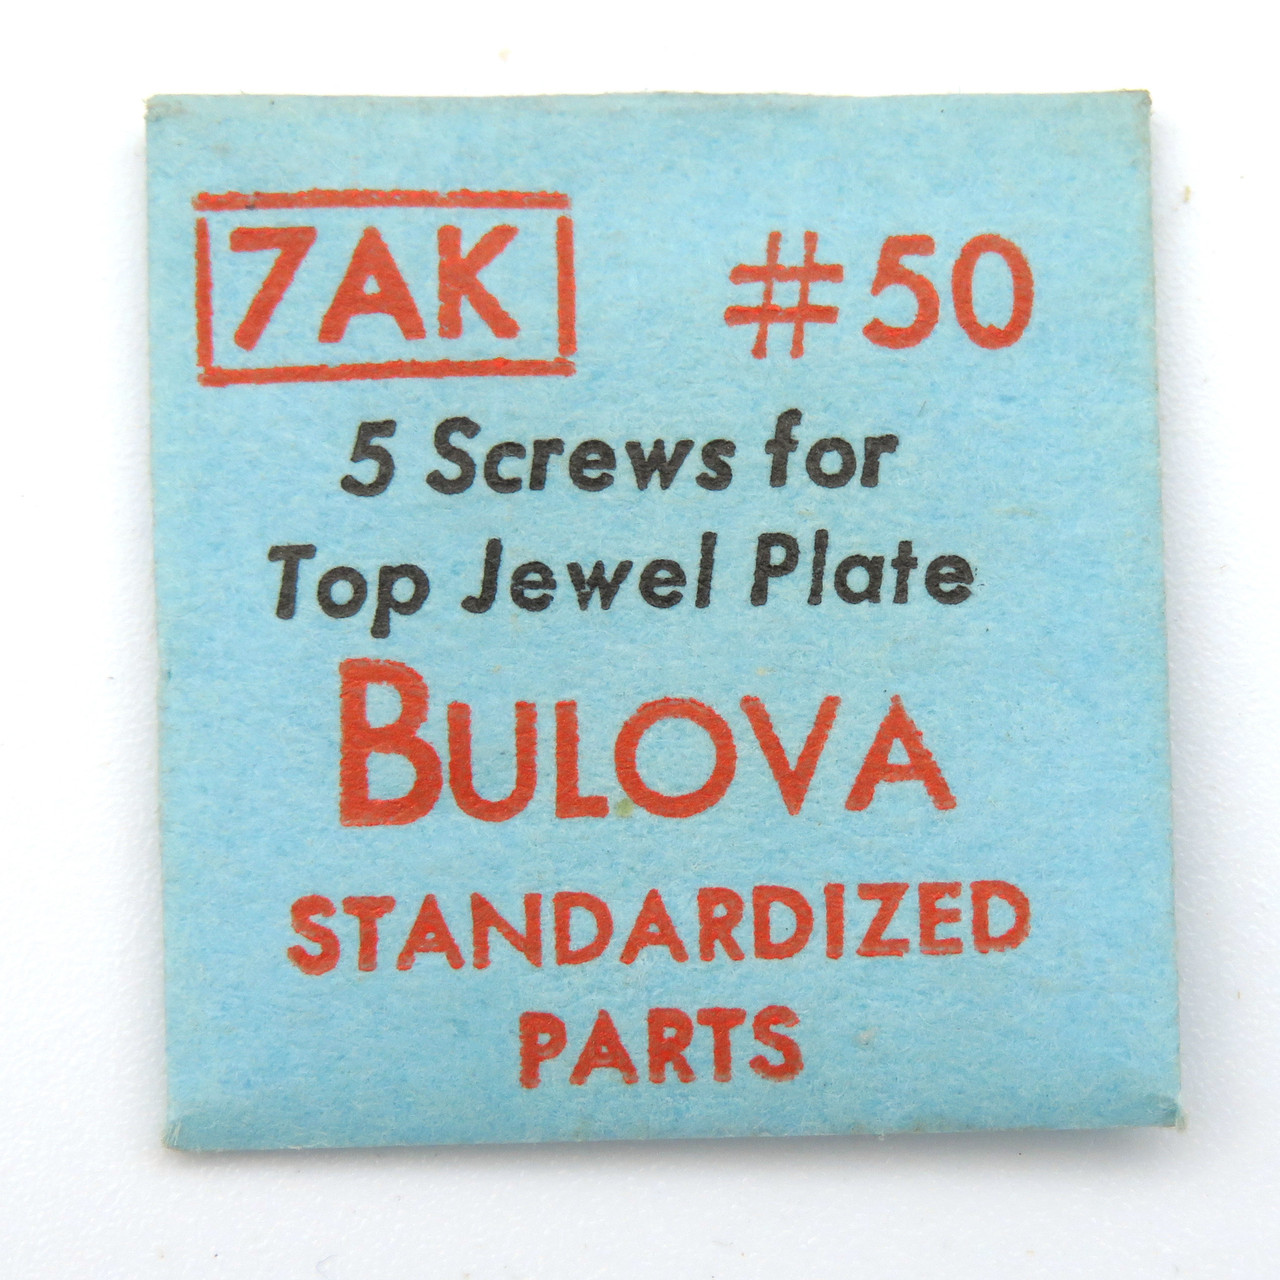 Bulova 7AK 5 Screws For Top Jewel Plate Part # 50